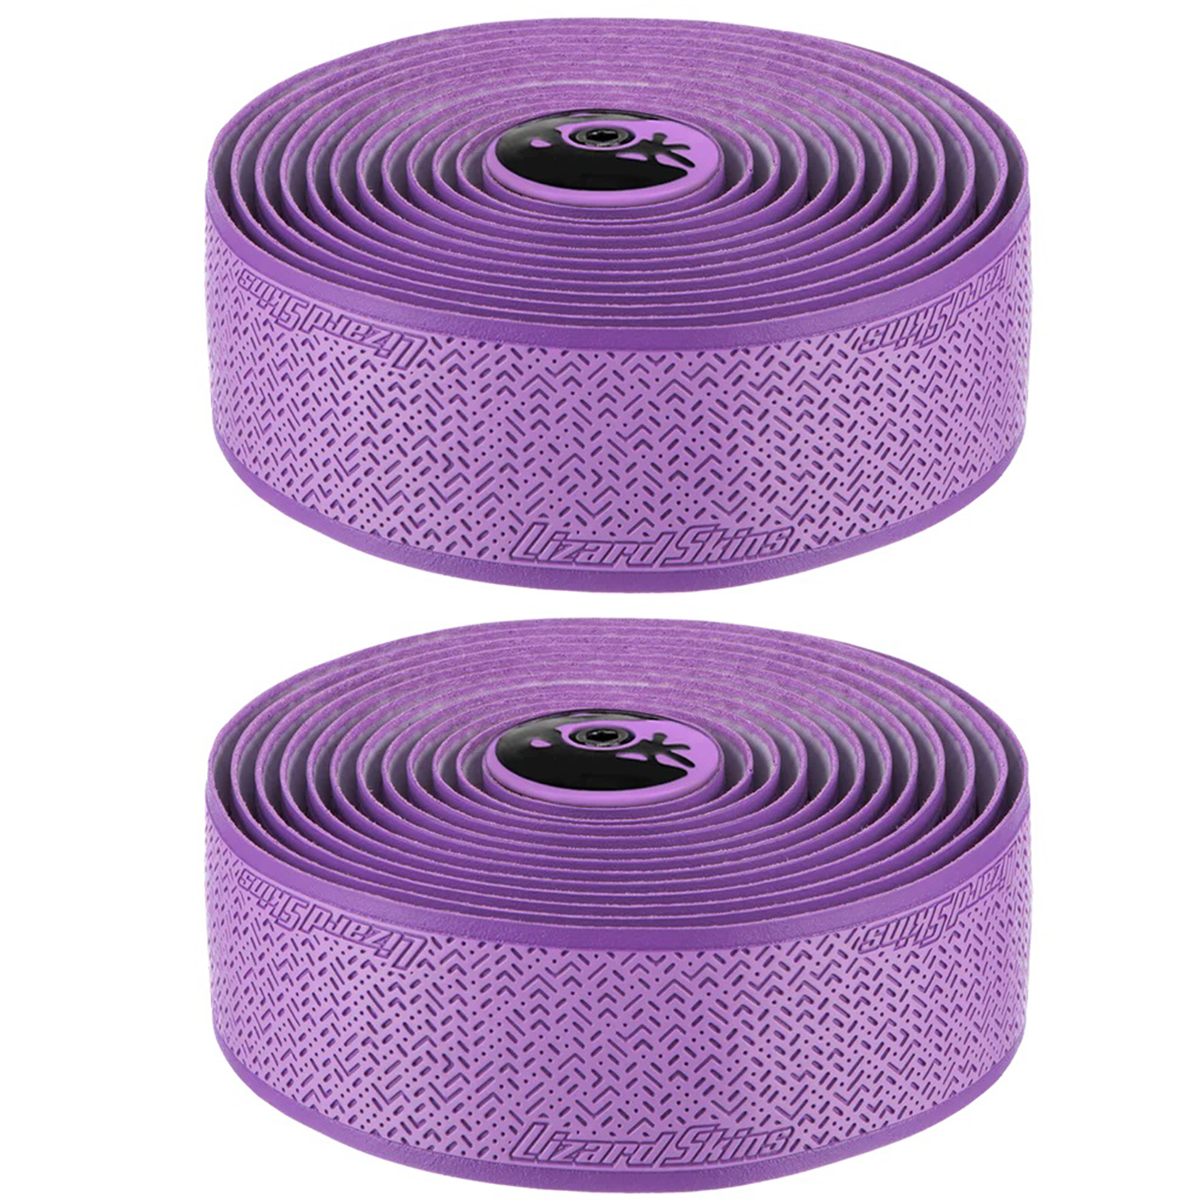 Lizard Skin Bar Tape - Violet Purple - 2.5mm